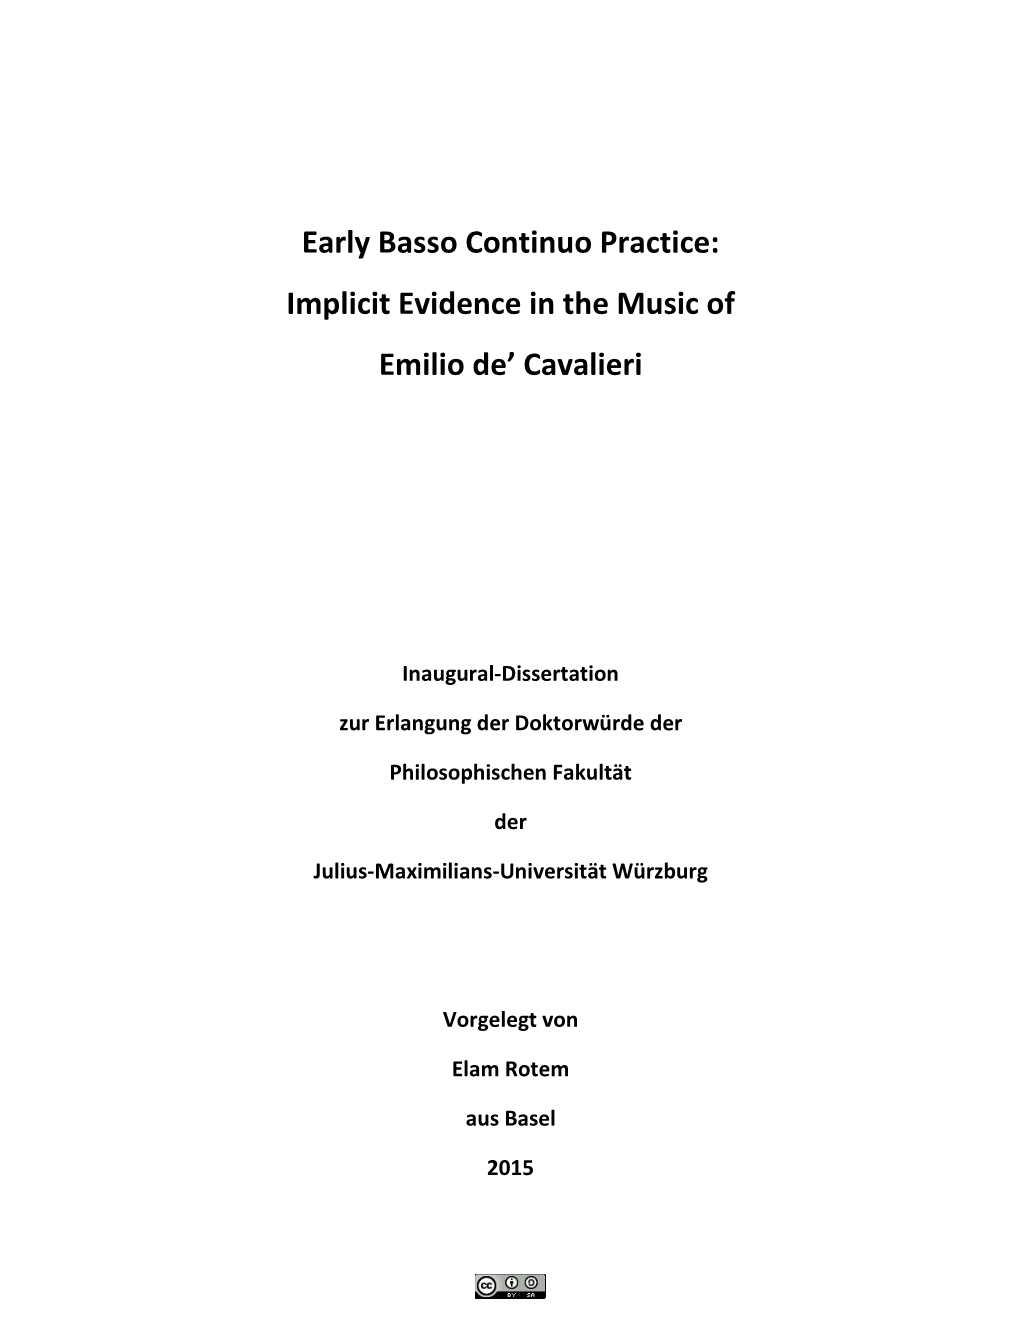 Early Basso Continuo Practice: Implicit Evidence in the Music of Emilio De’ Cavalieri